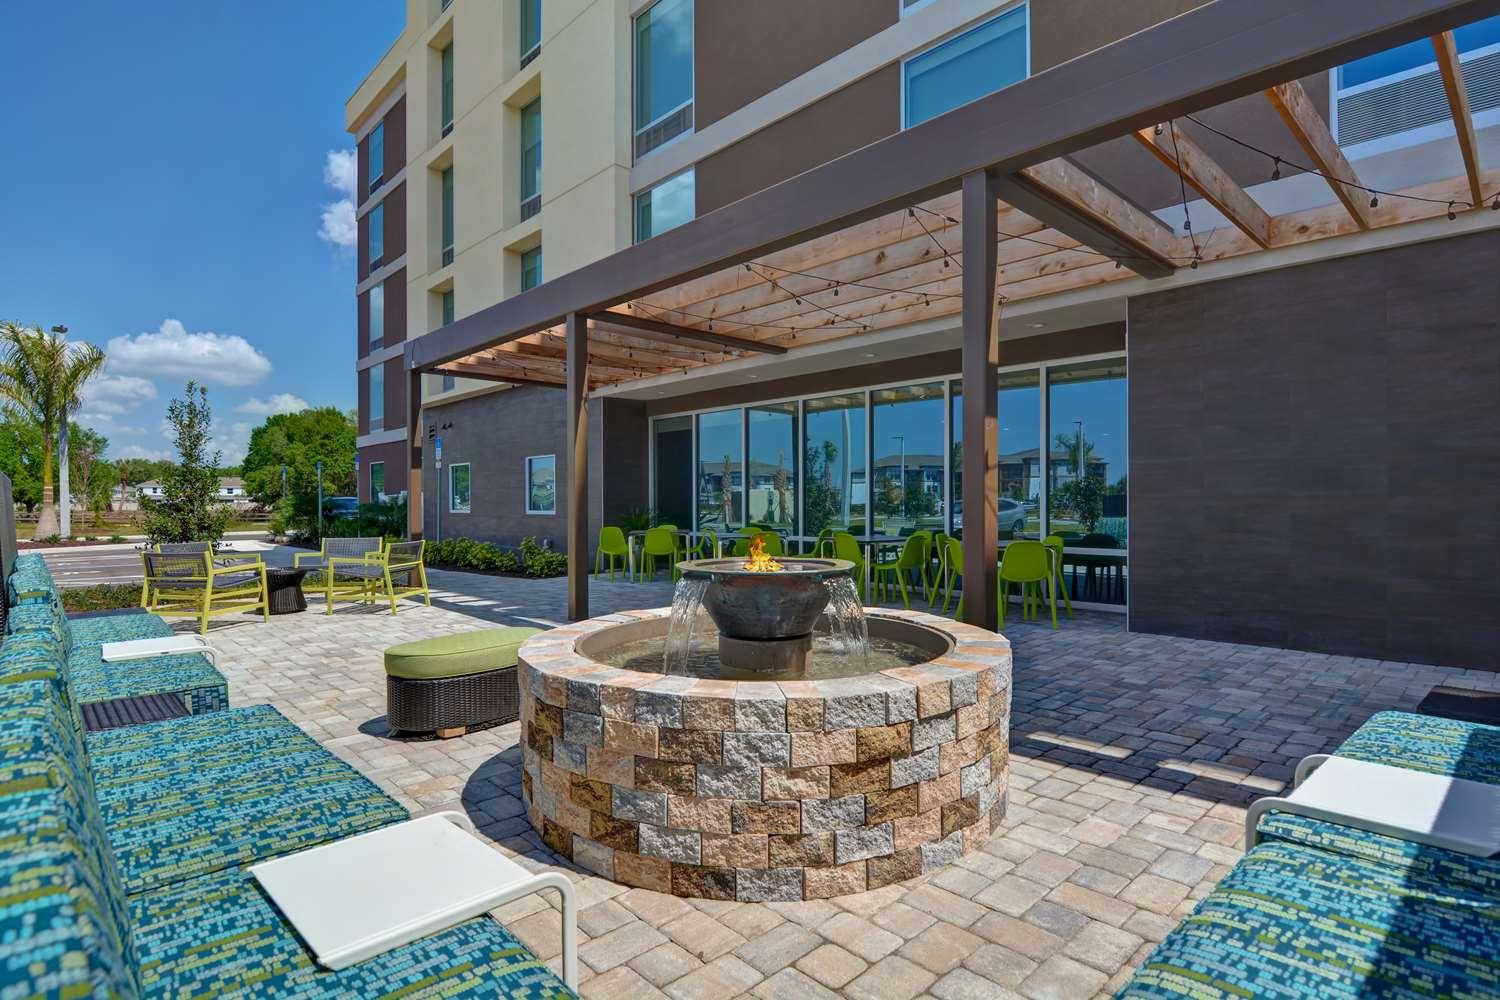 Home2 Suites by Hilton Sarasota I-75 Bee Ridge in Sarasota, FL